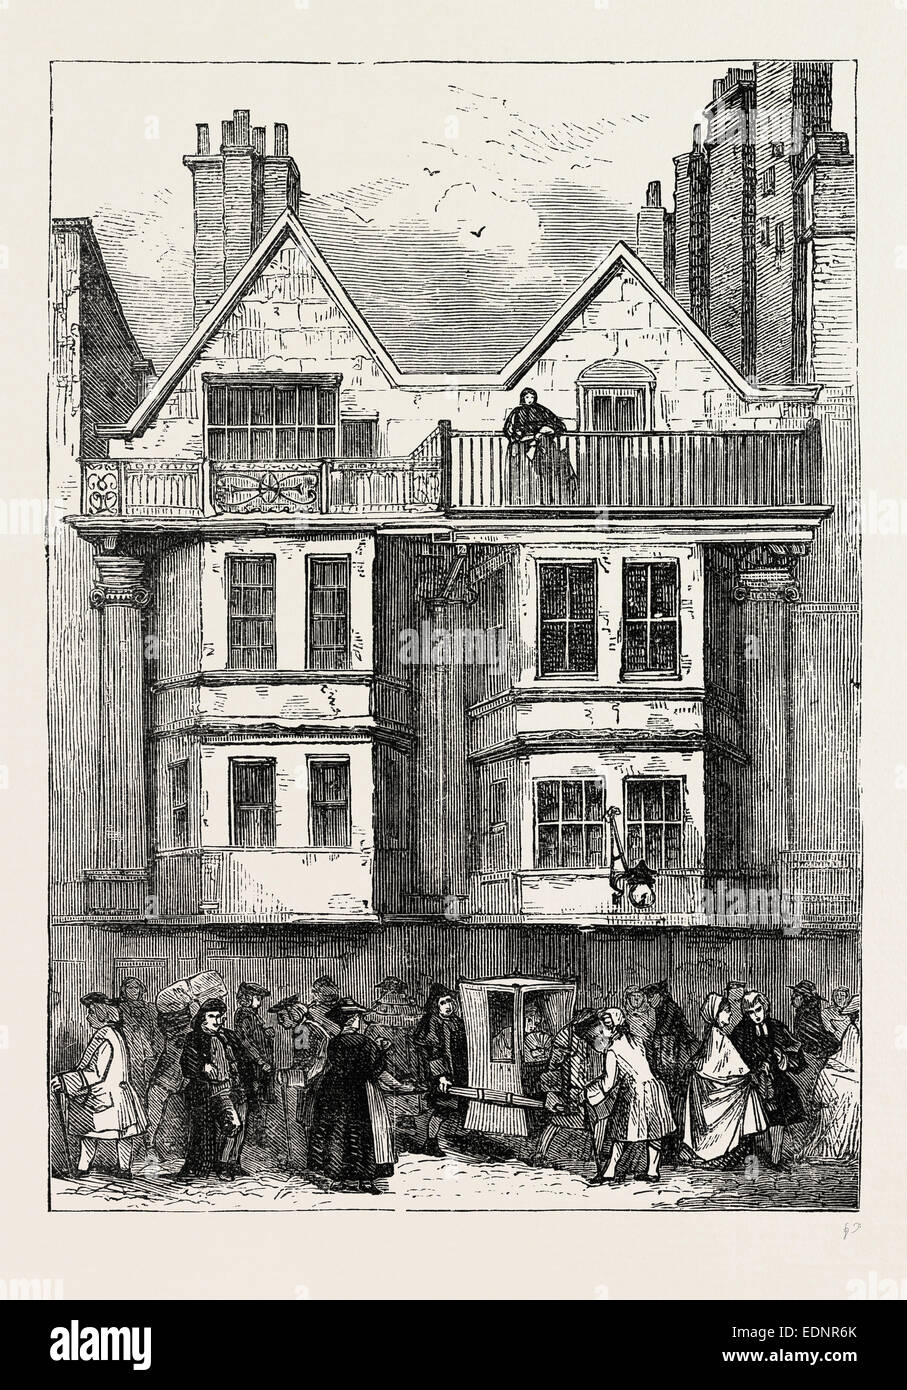 Old houses in Fleet street, near ST. Dunstan's Church, London, UK, 19th century engraving Stock Photo